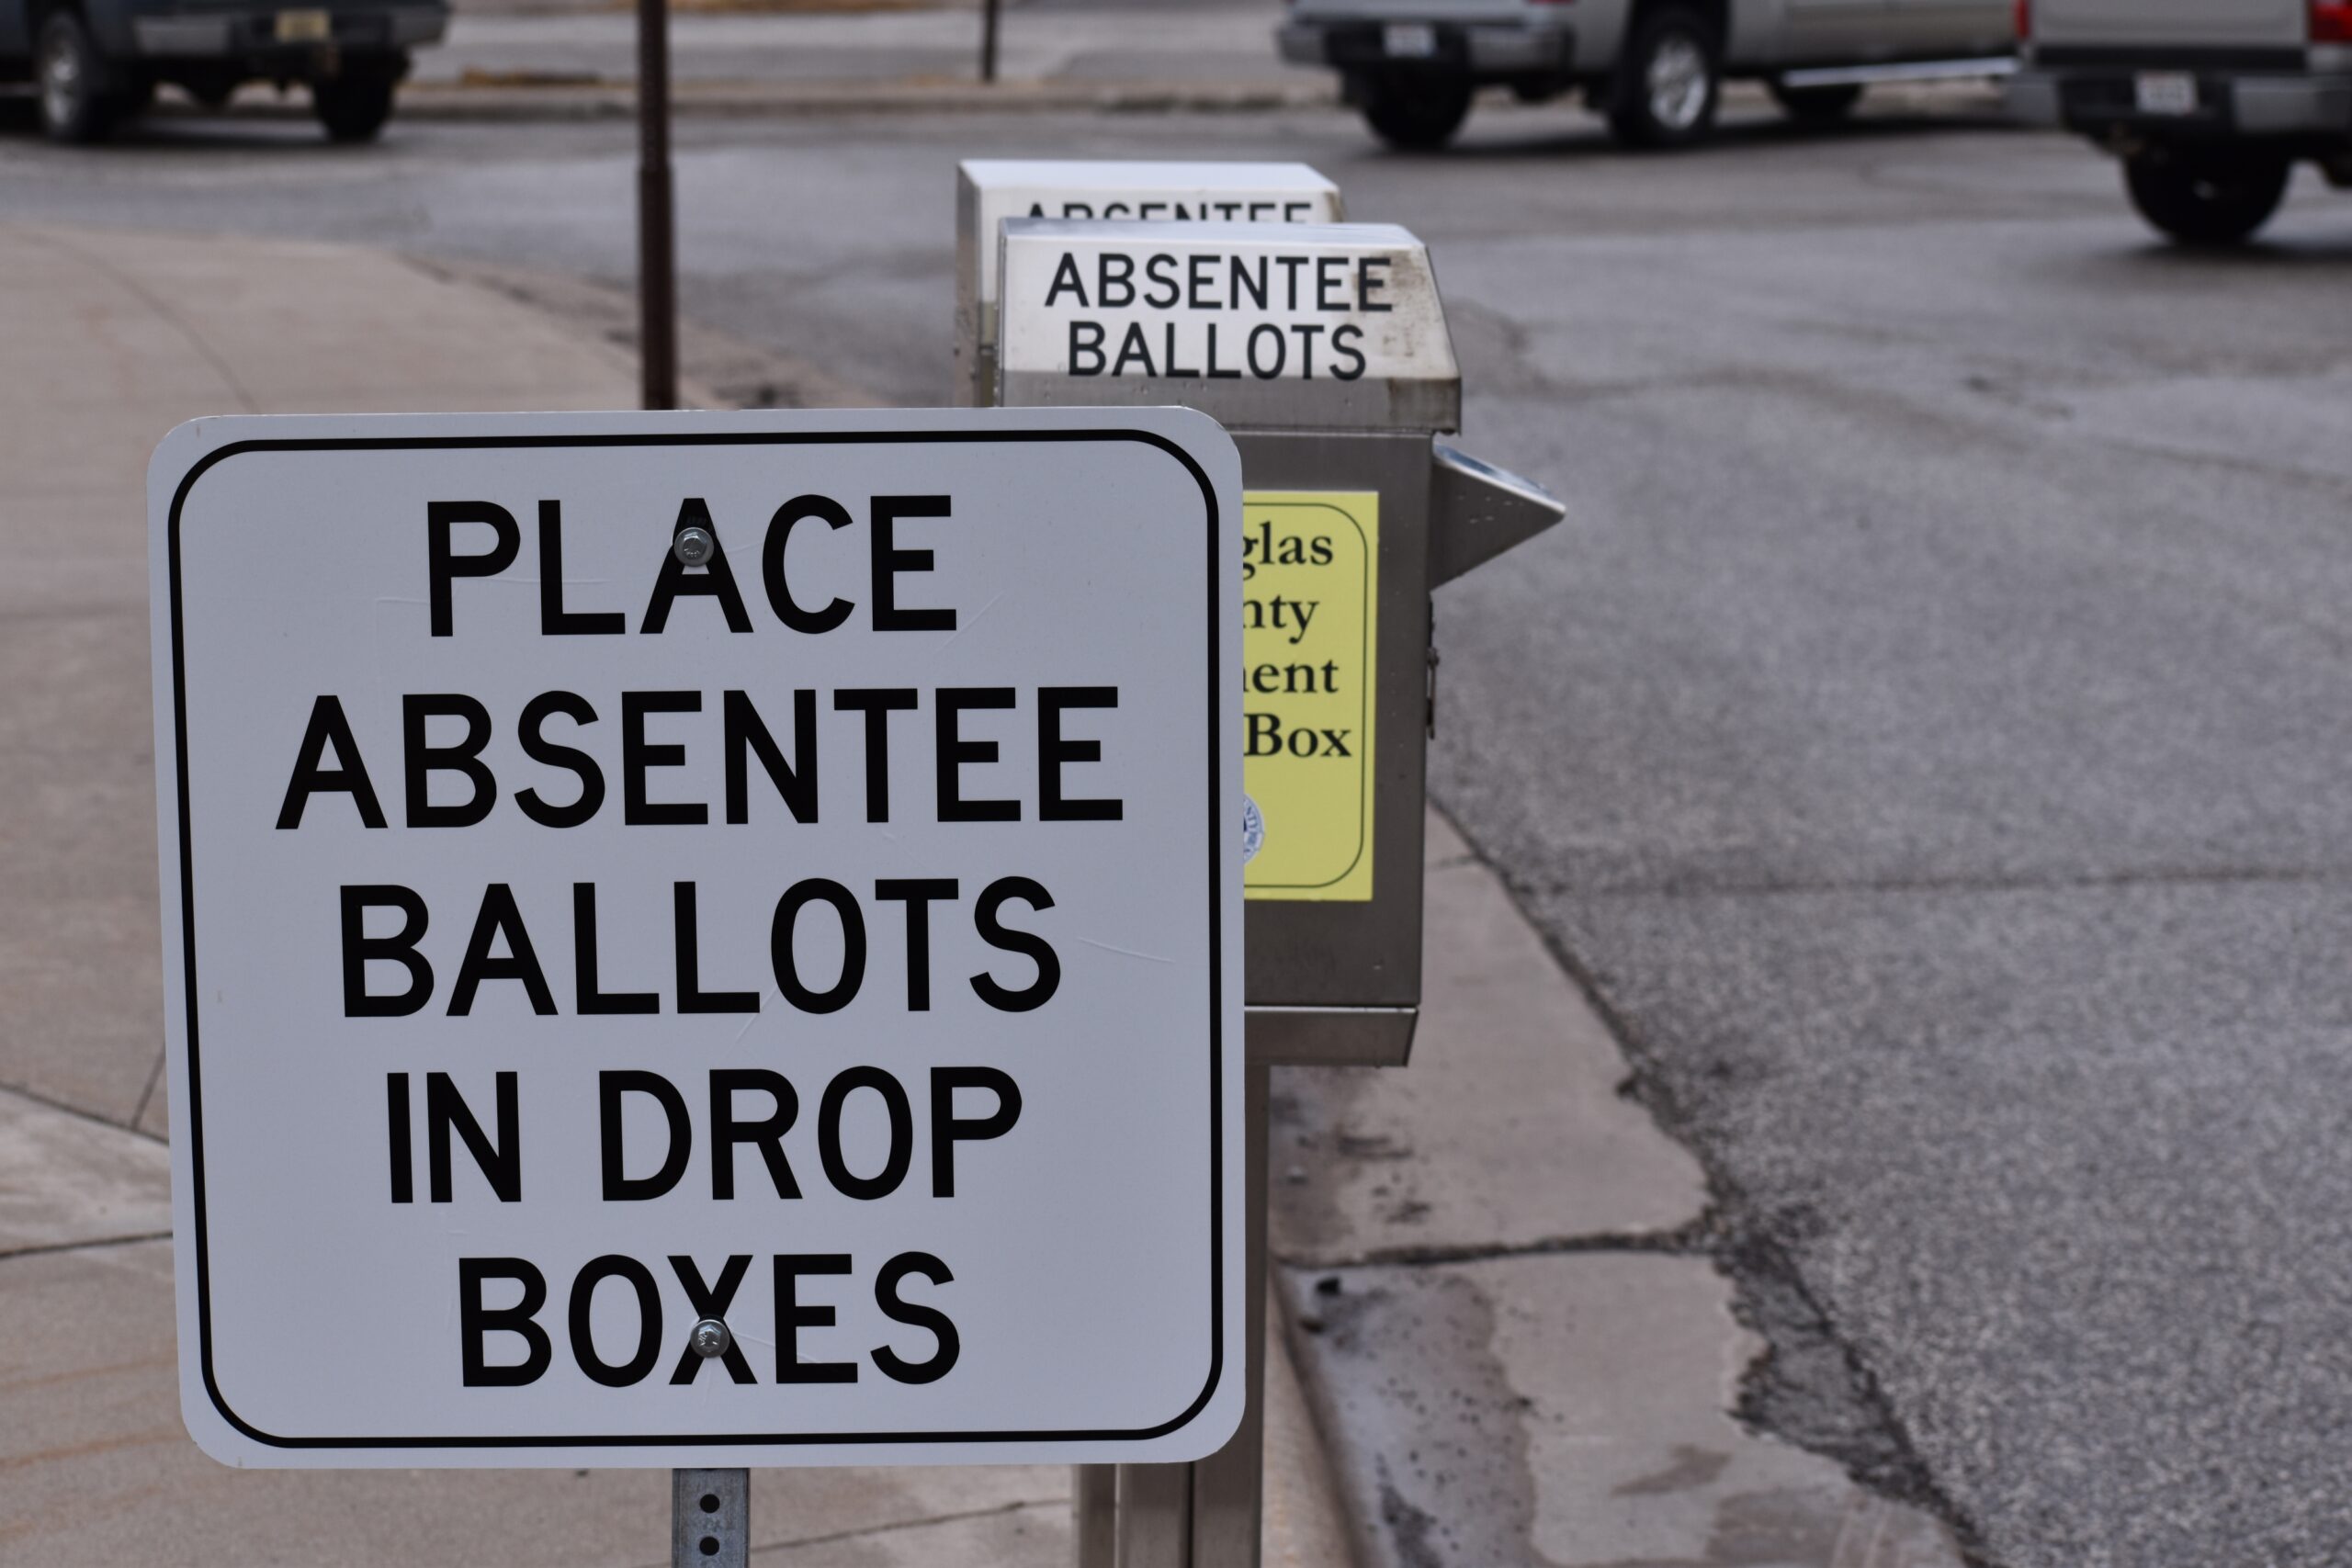 Superior has a drop box for absentee ballots